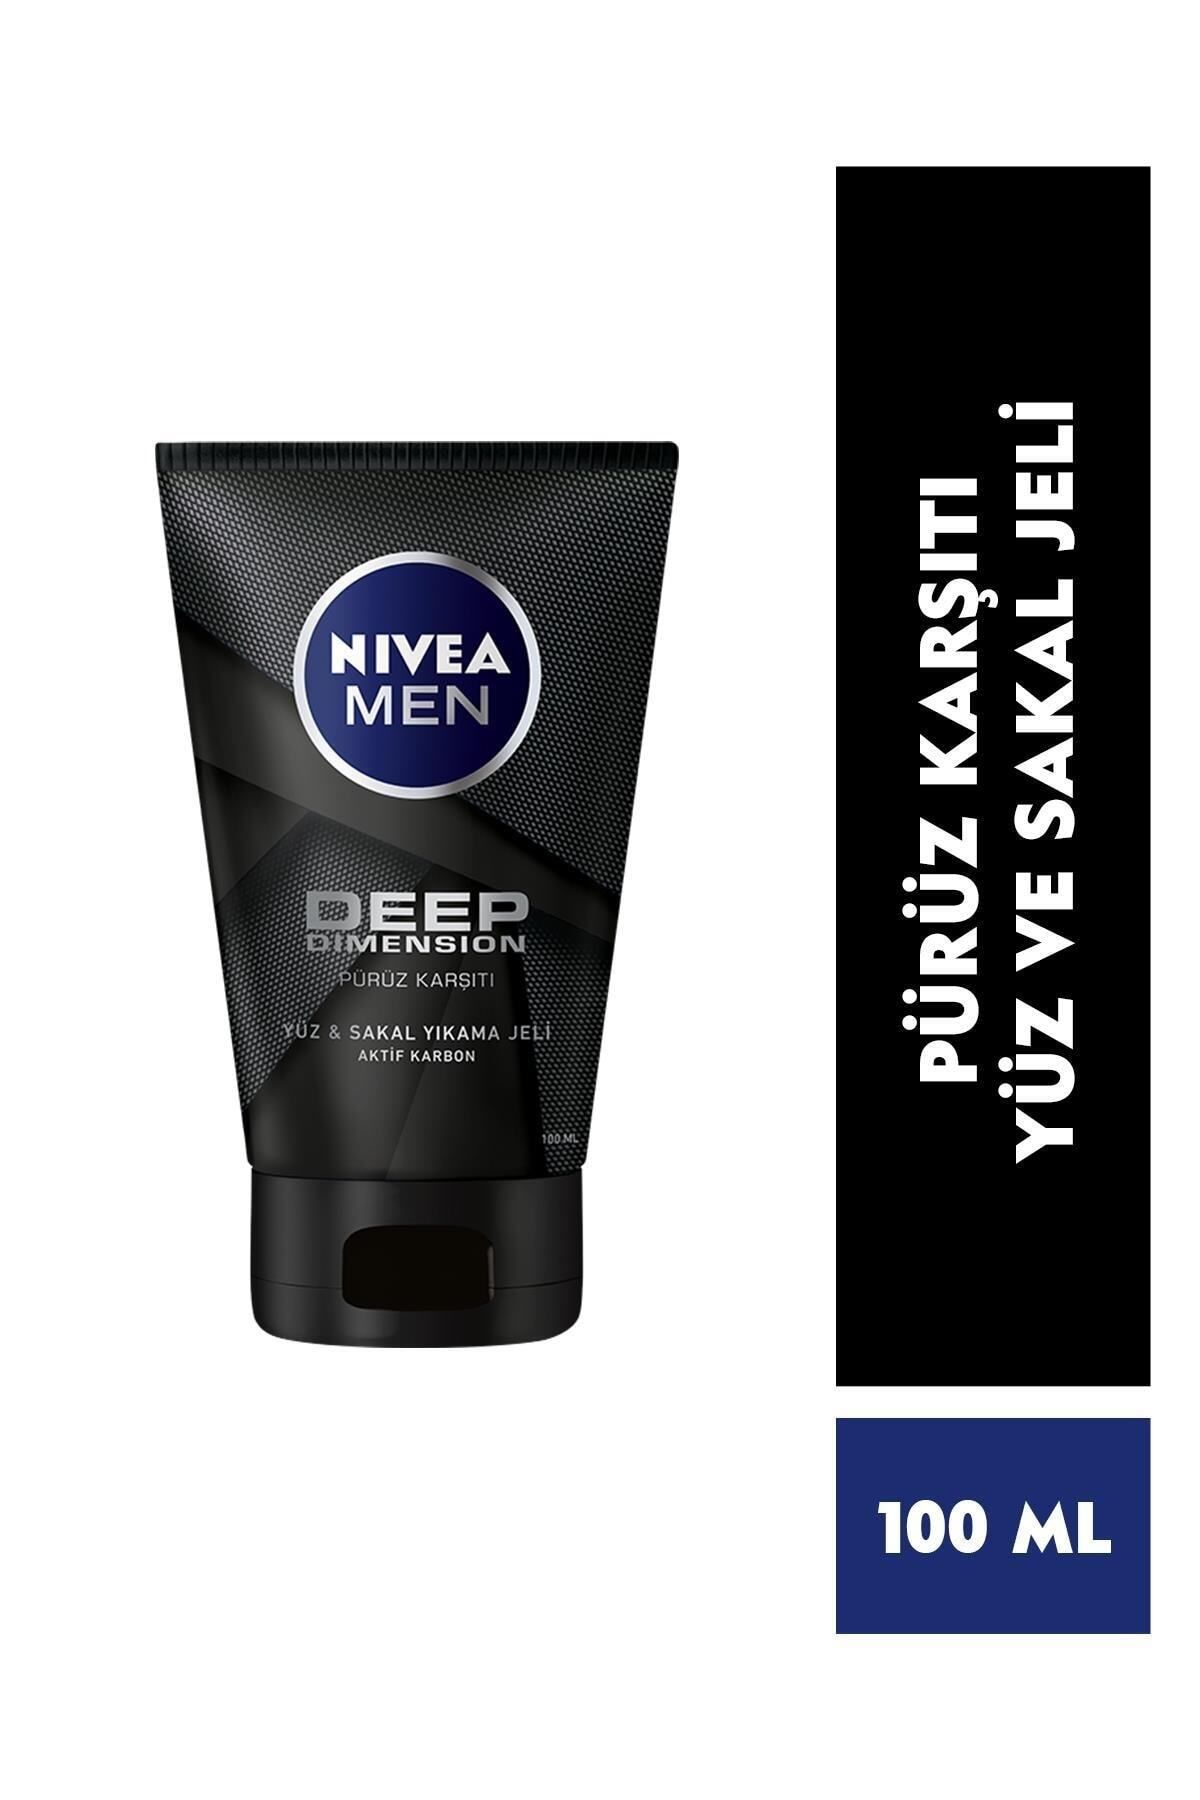 NIVEA ژل تمیزکننده صورت و صابون مایع عمیق مردانه 100 میلی لیتر